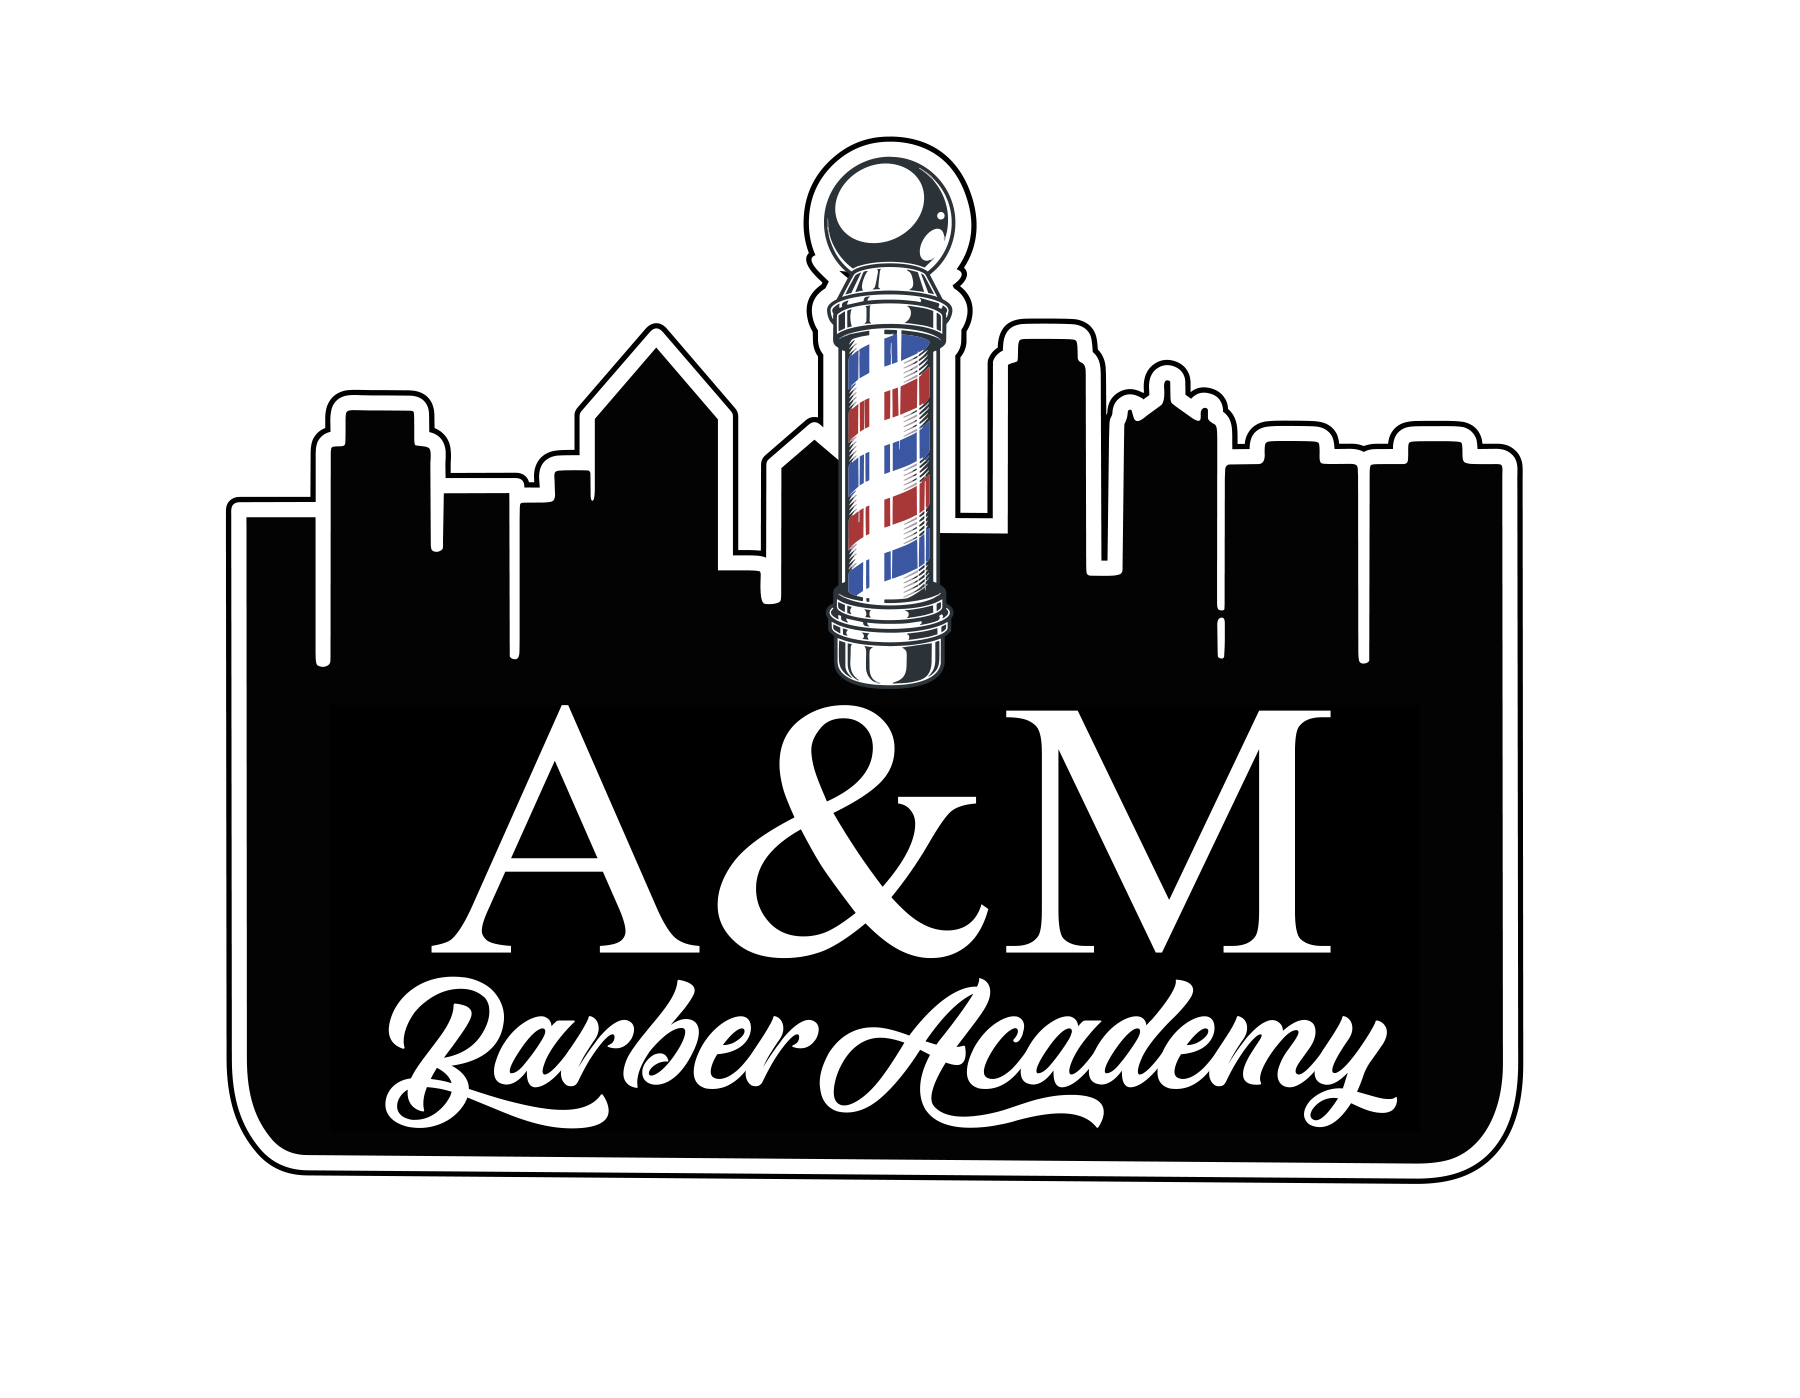 A&M Barber Academy